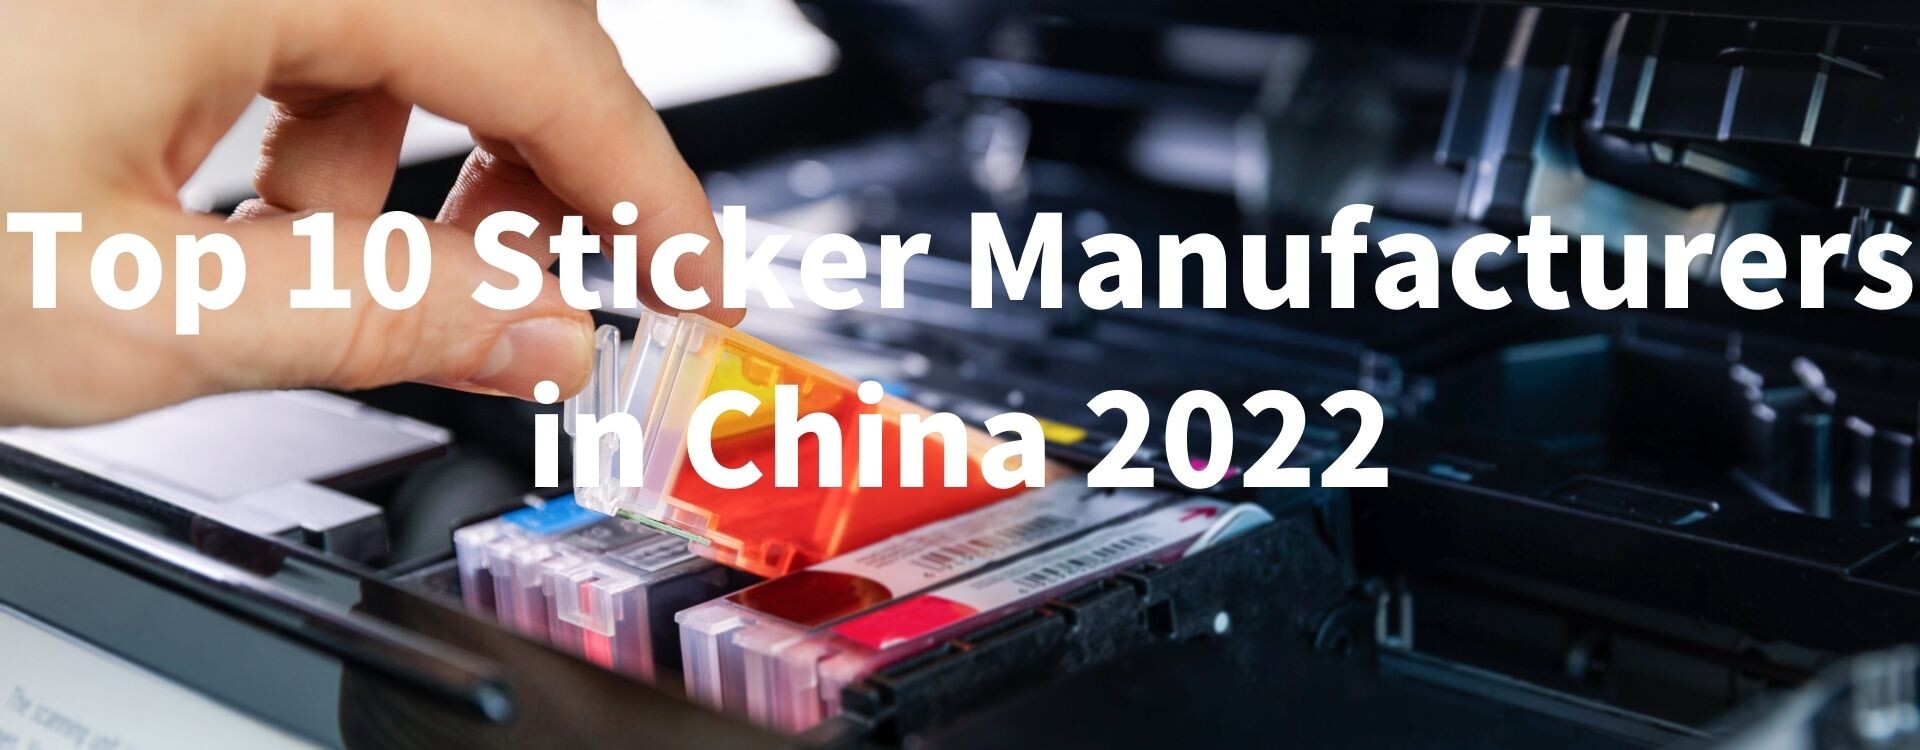 Top 10 Sticker Manufacturers in China 2022